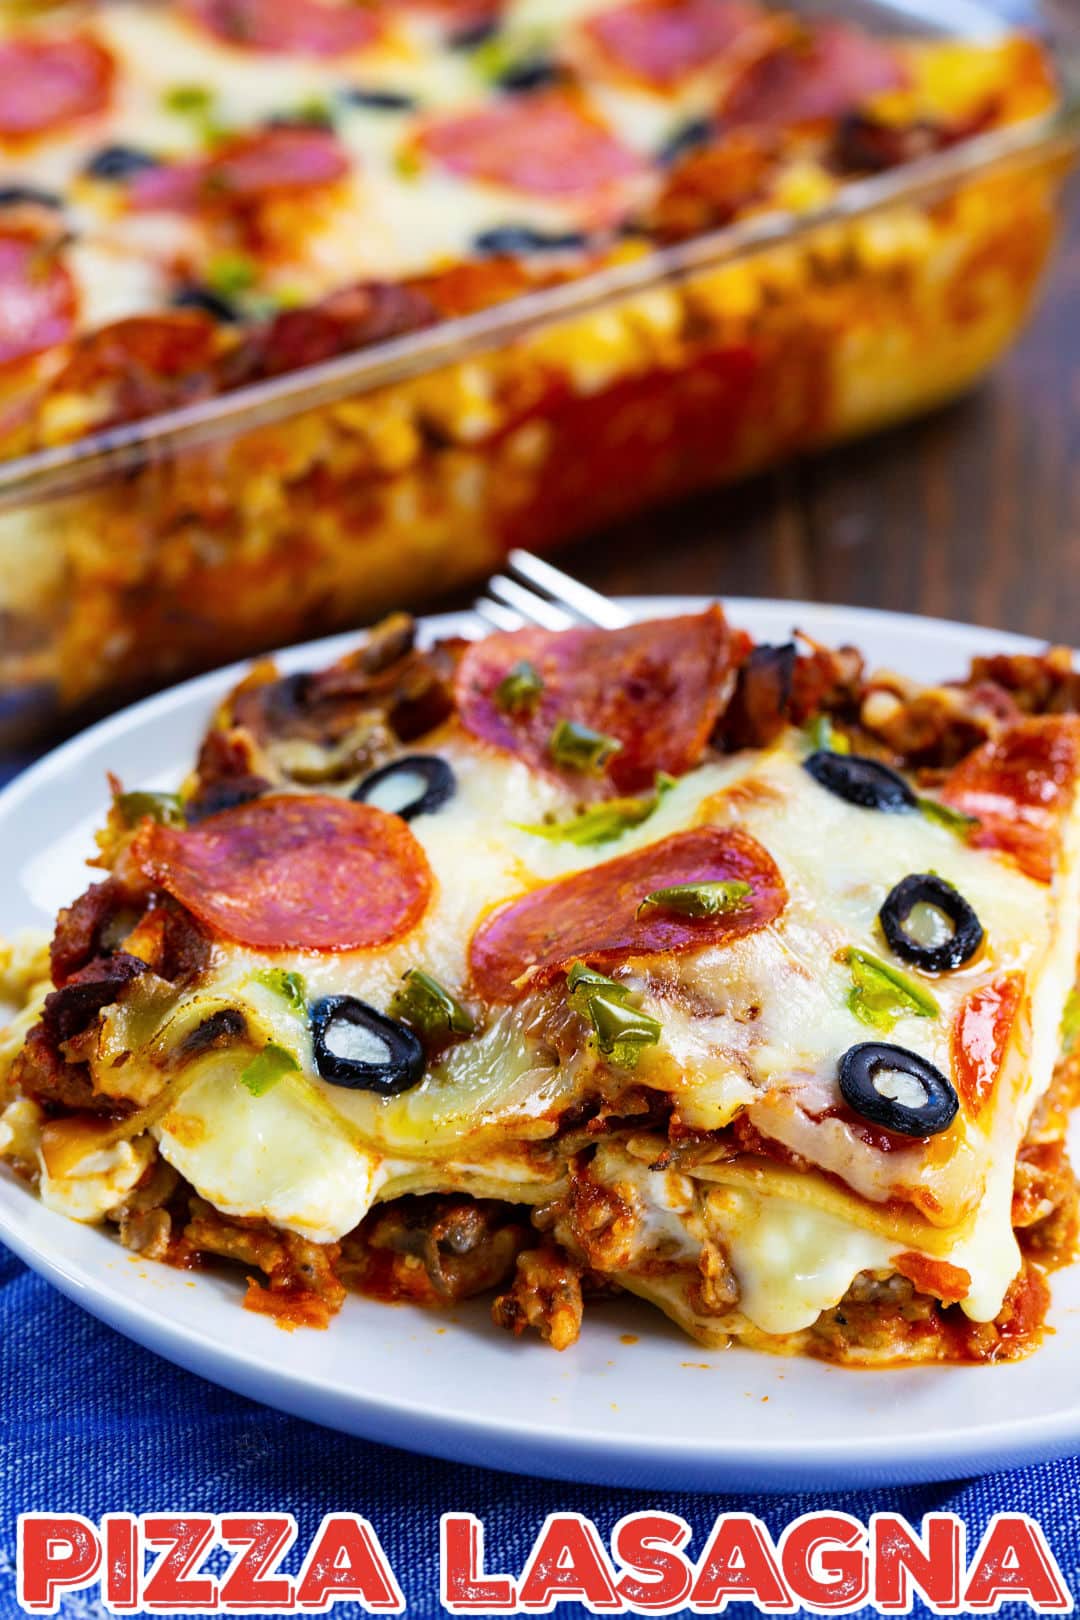 Slice of lasagna on a plate.